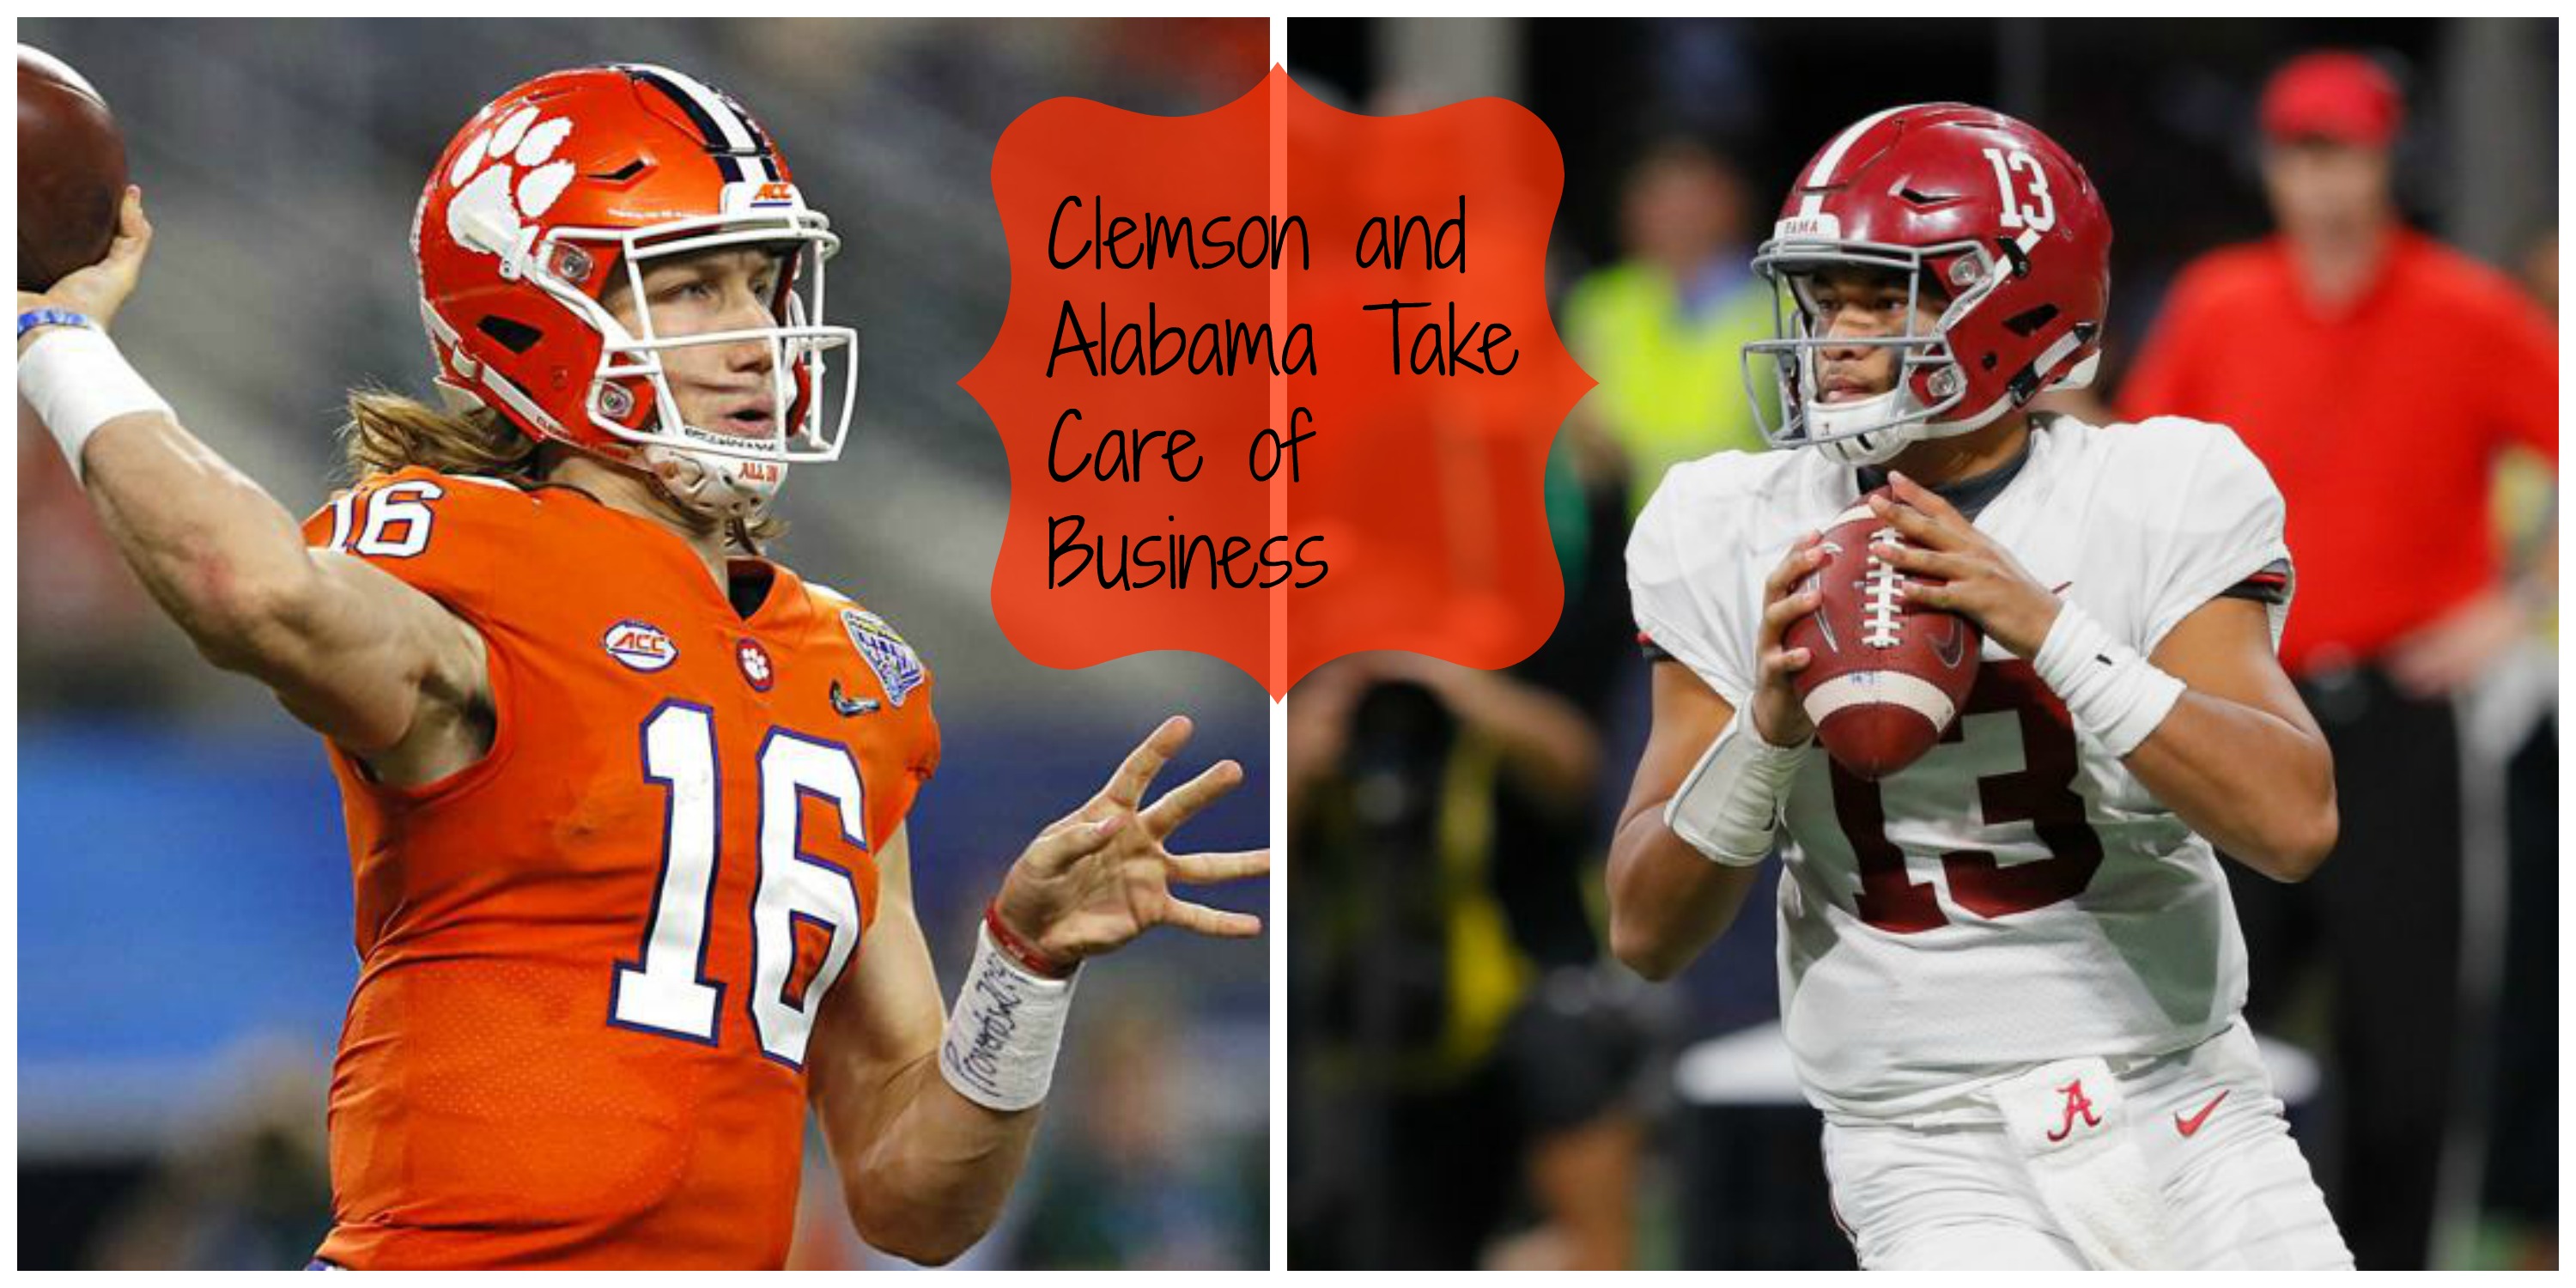 Clemson and Alabama Take Care of Business